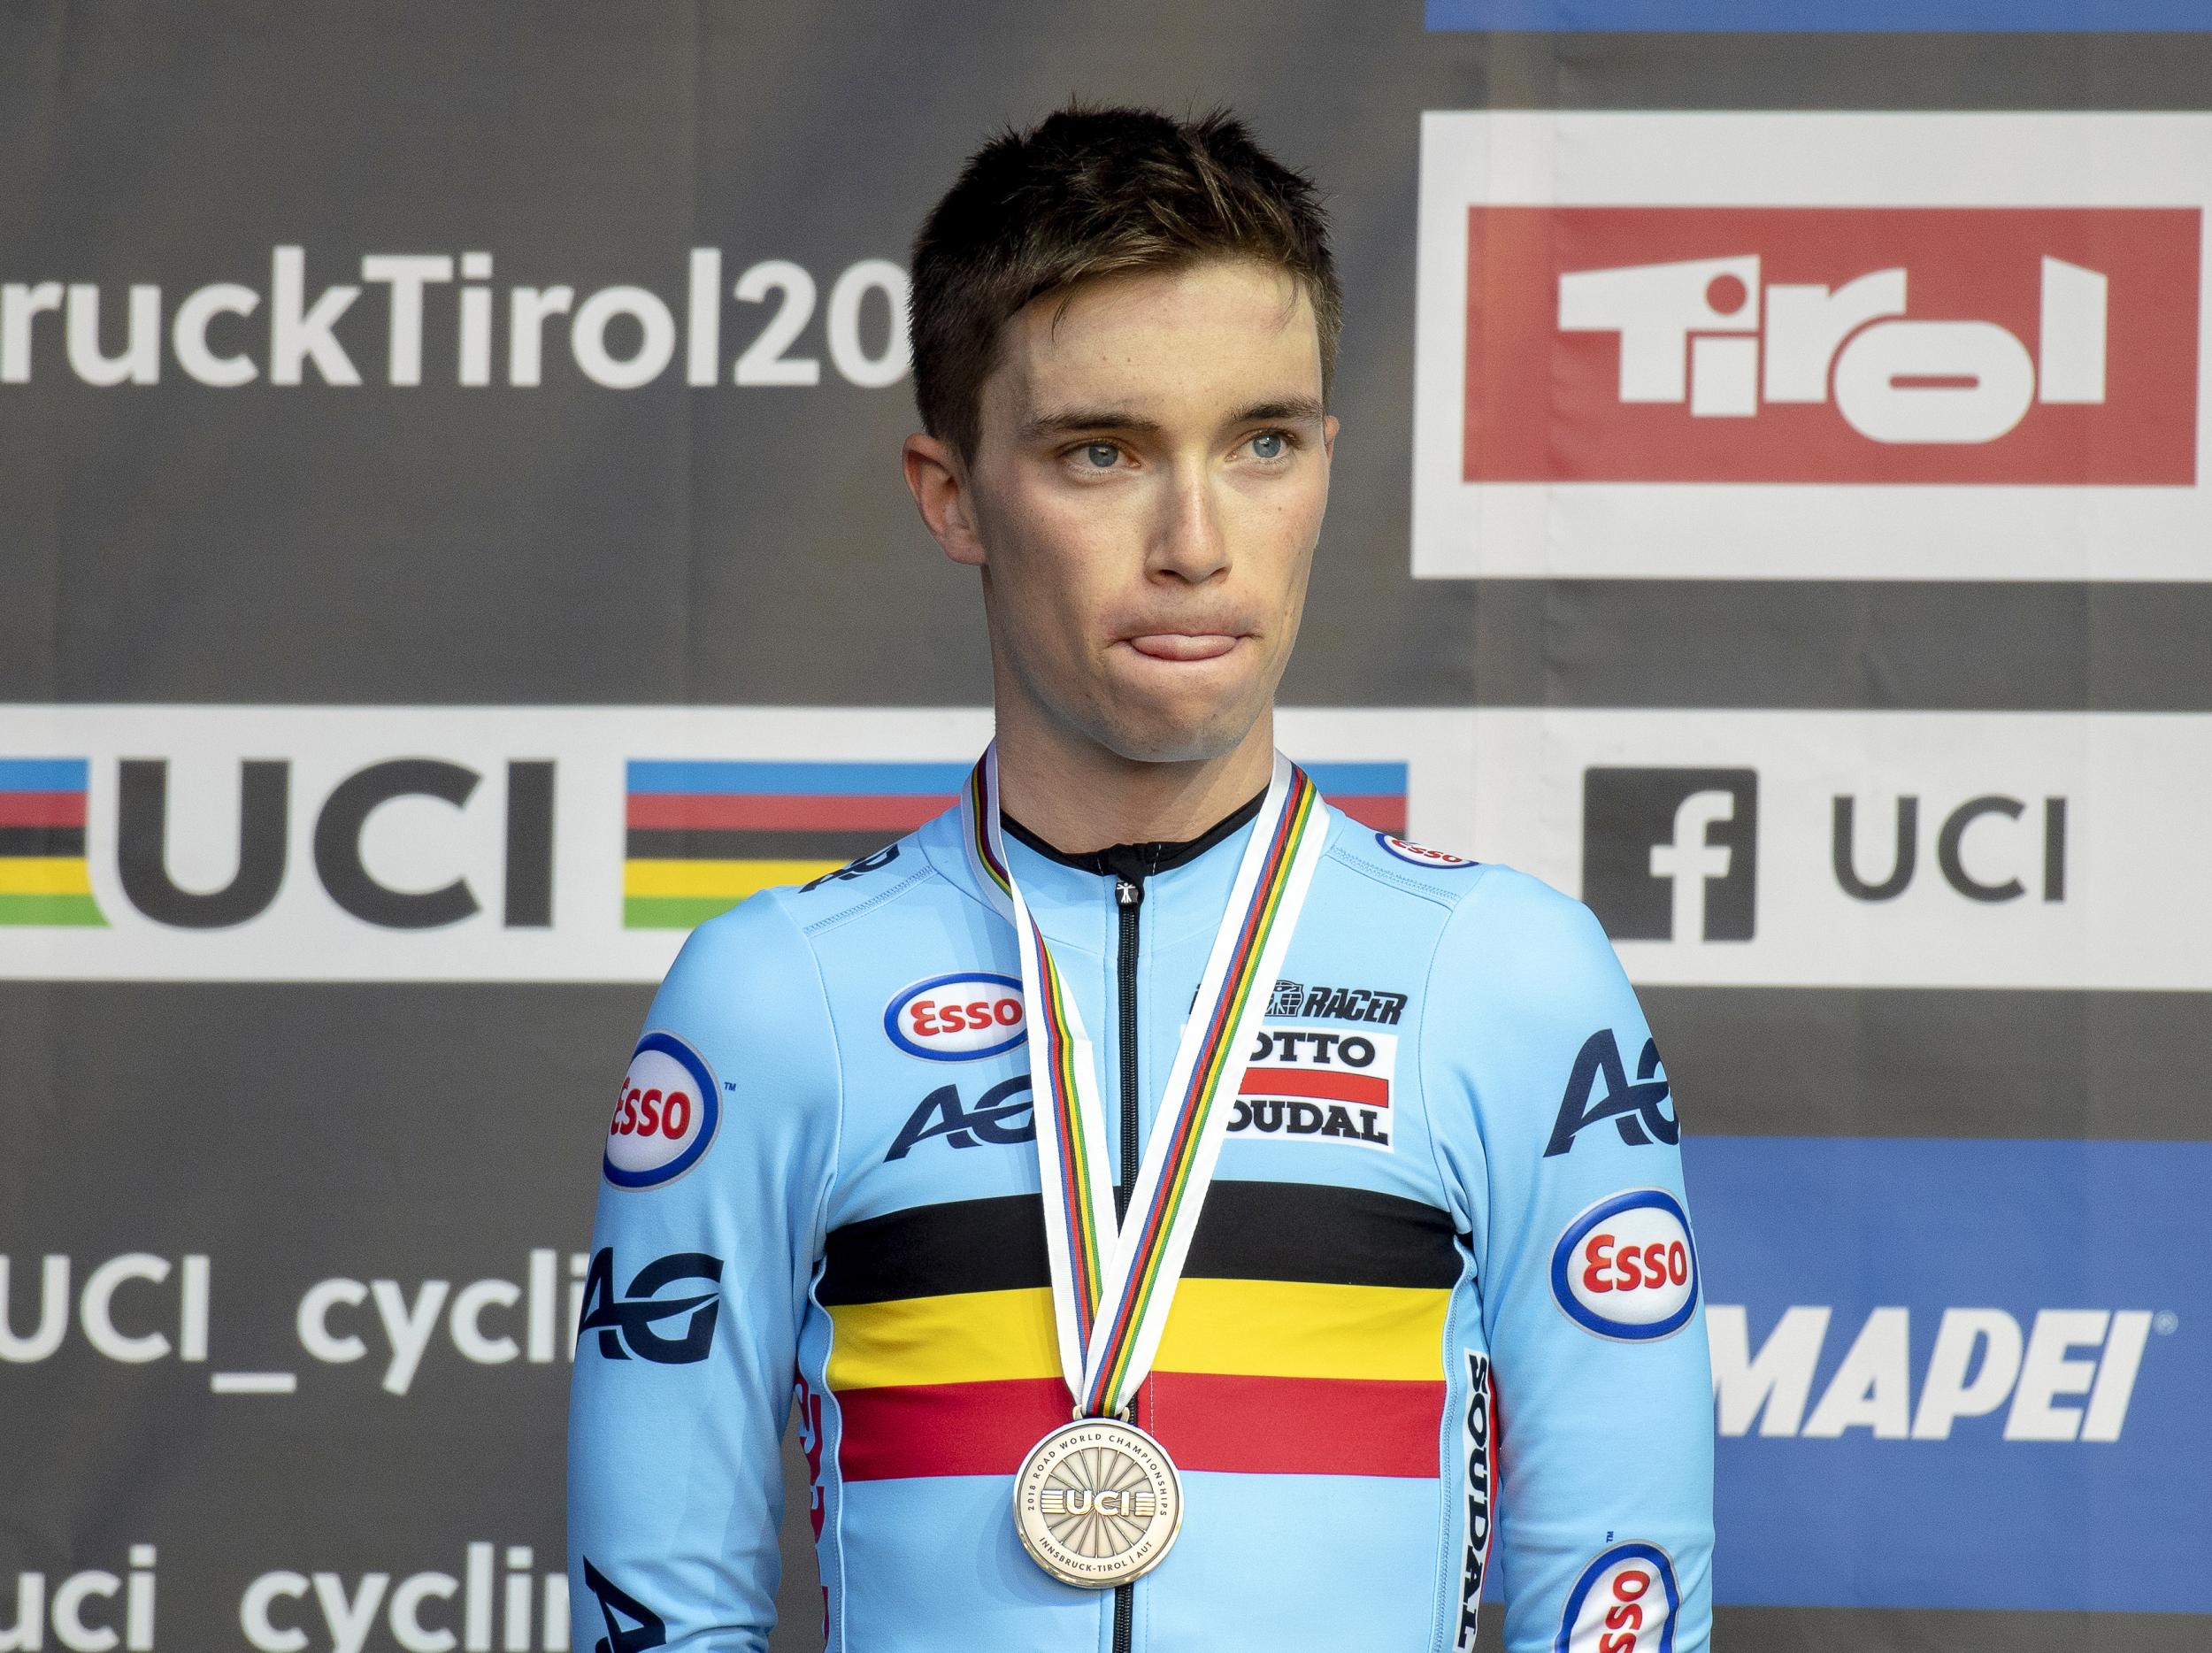 Belgian cyclist Bjorg Lambrecht dies aged 22 after crash | The ...